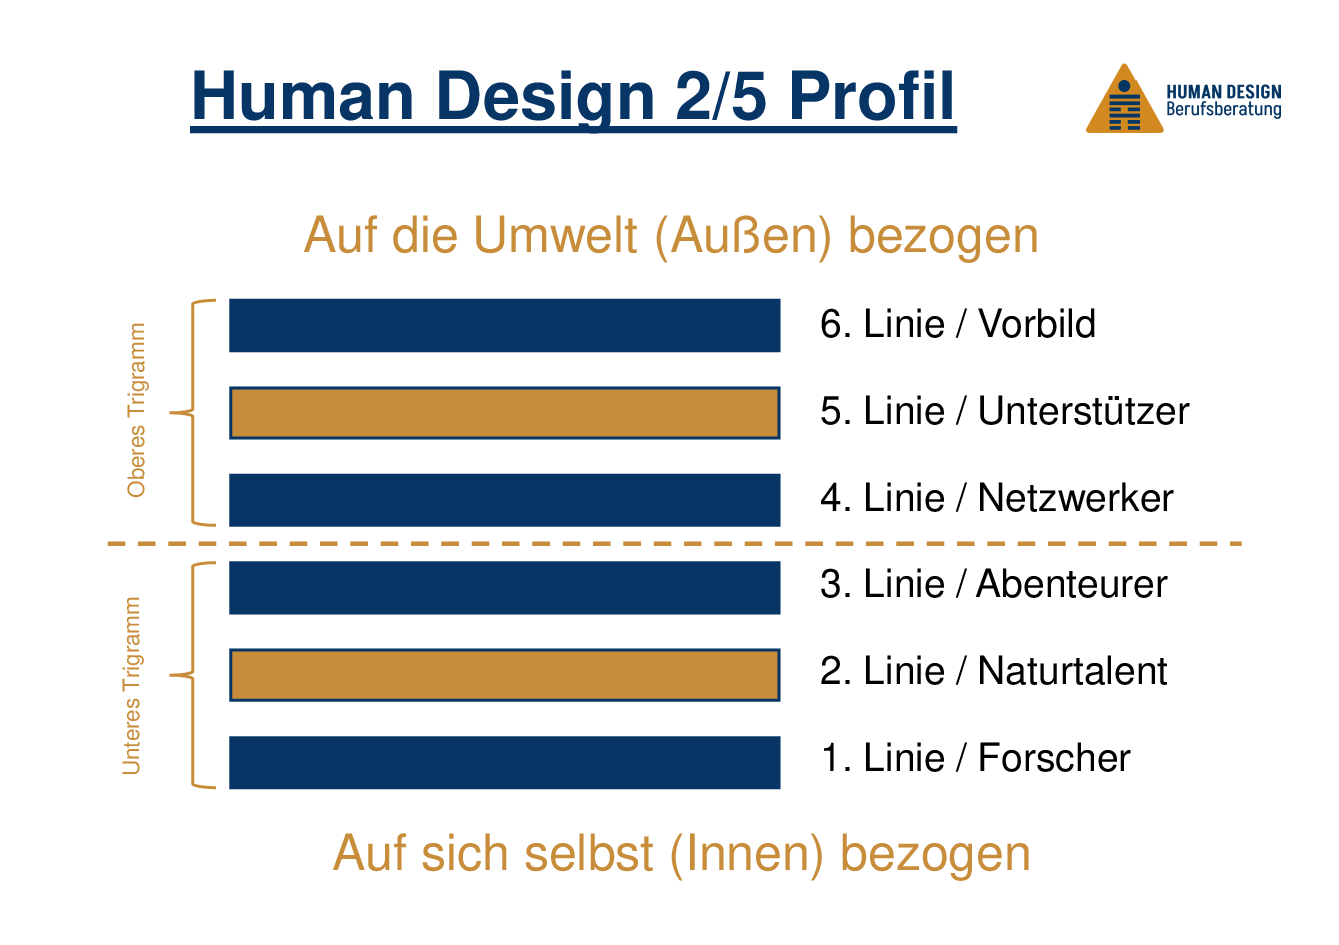 Human Design 2/5 Profil im Beruf